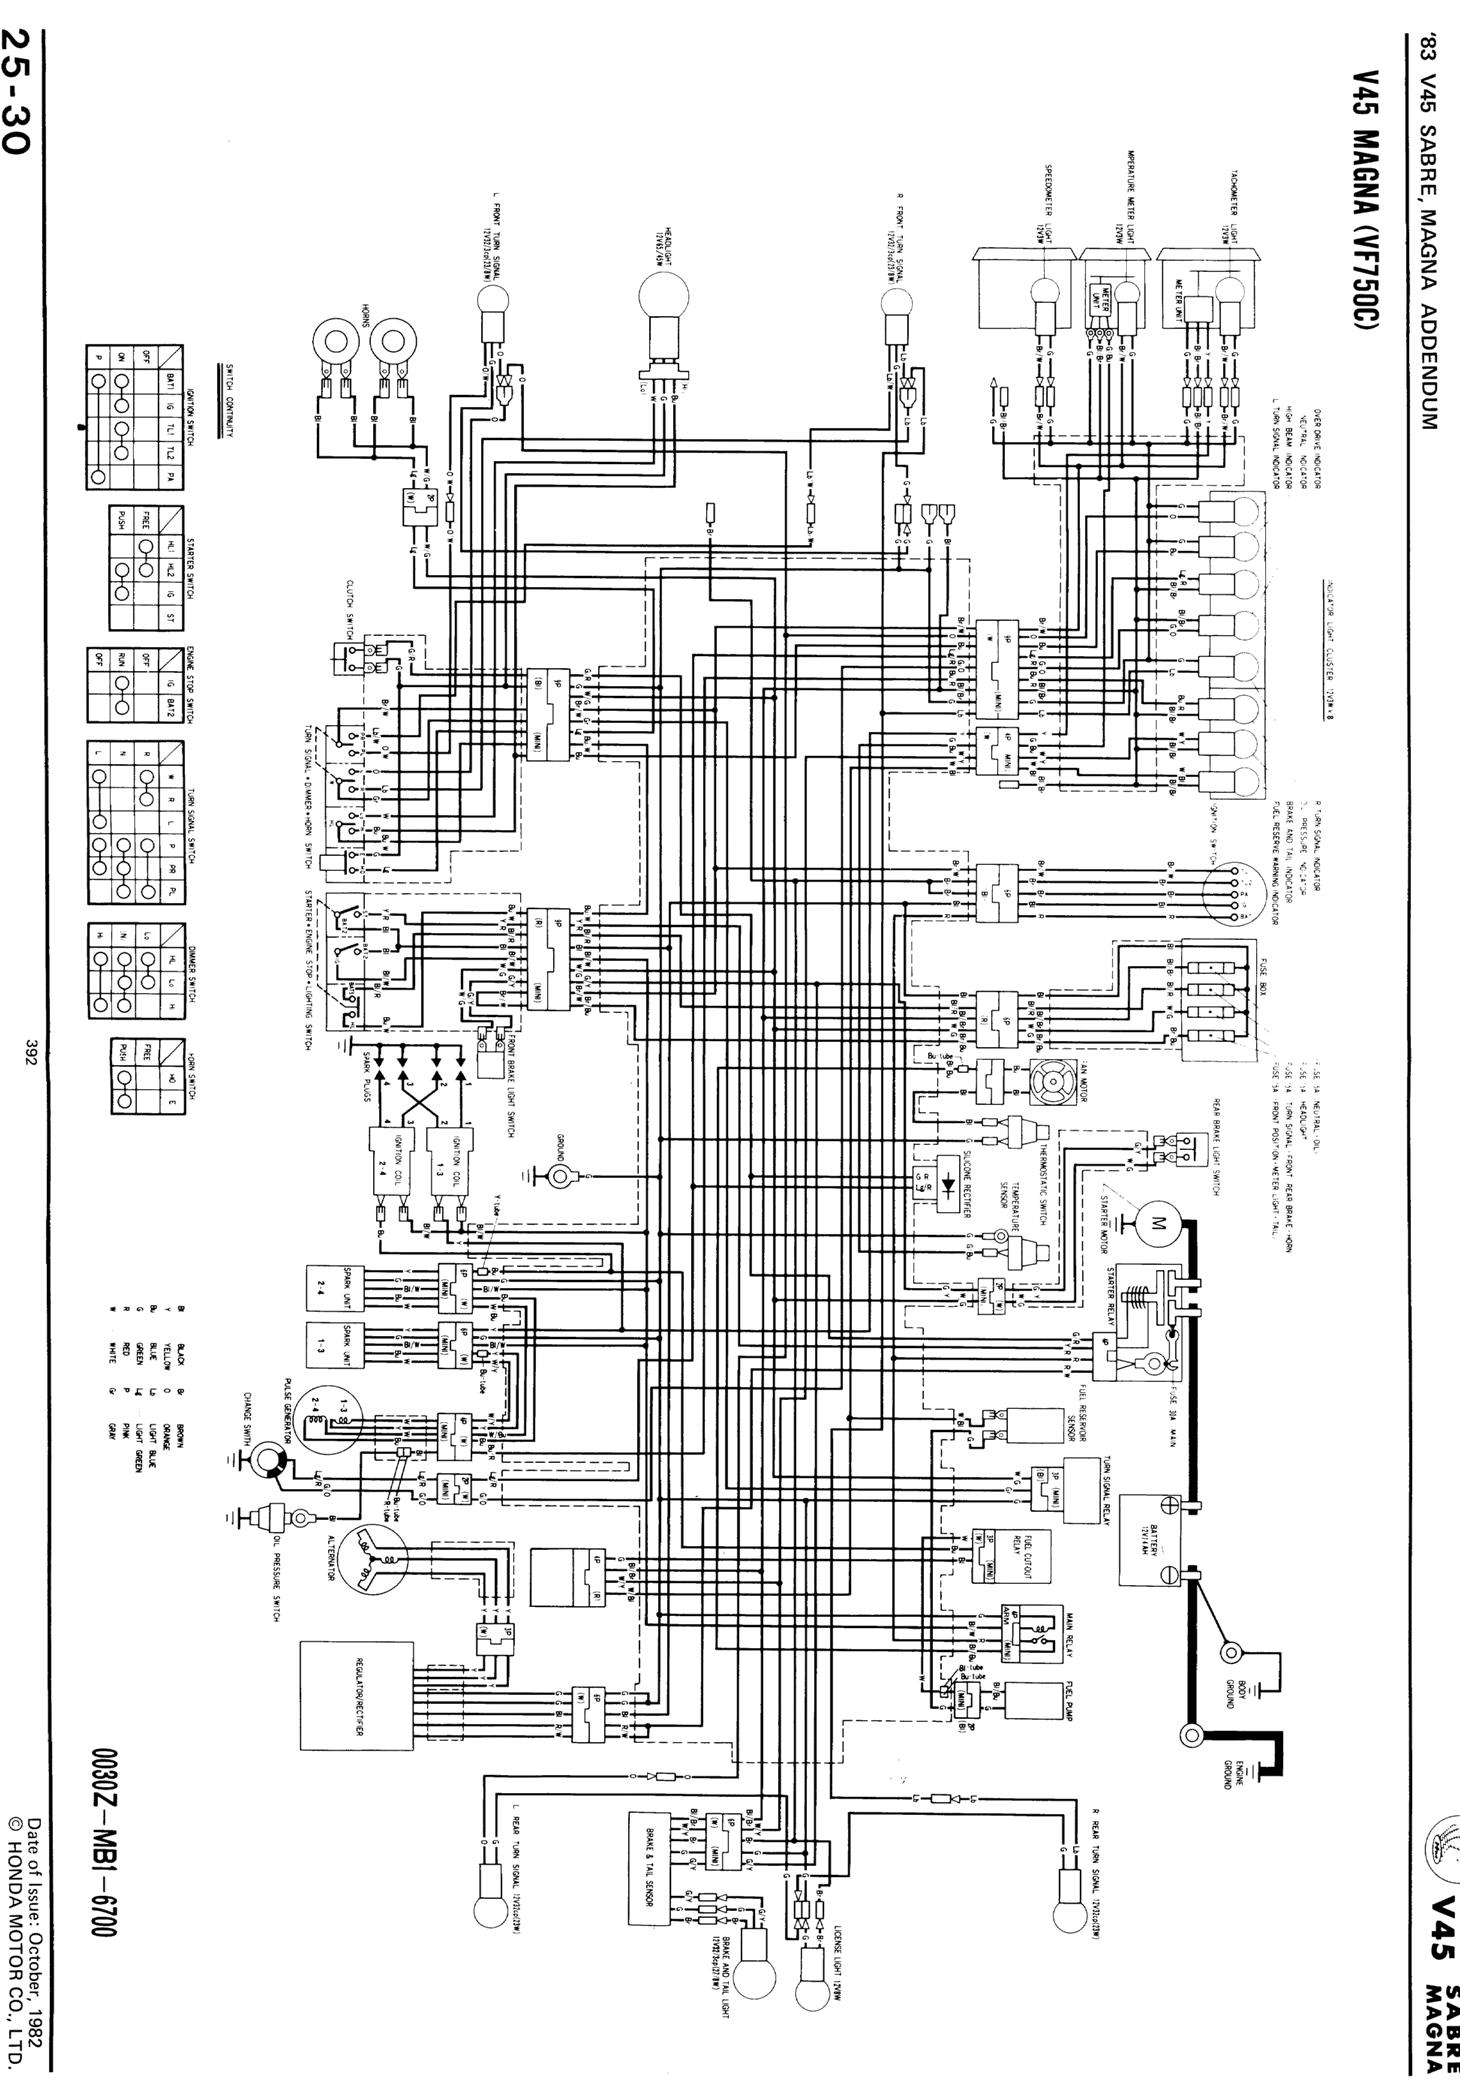 1983 Honda v45 magna wiring diagram #2